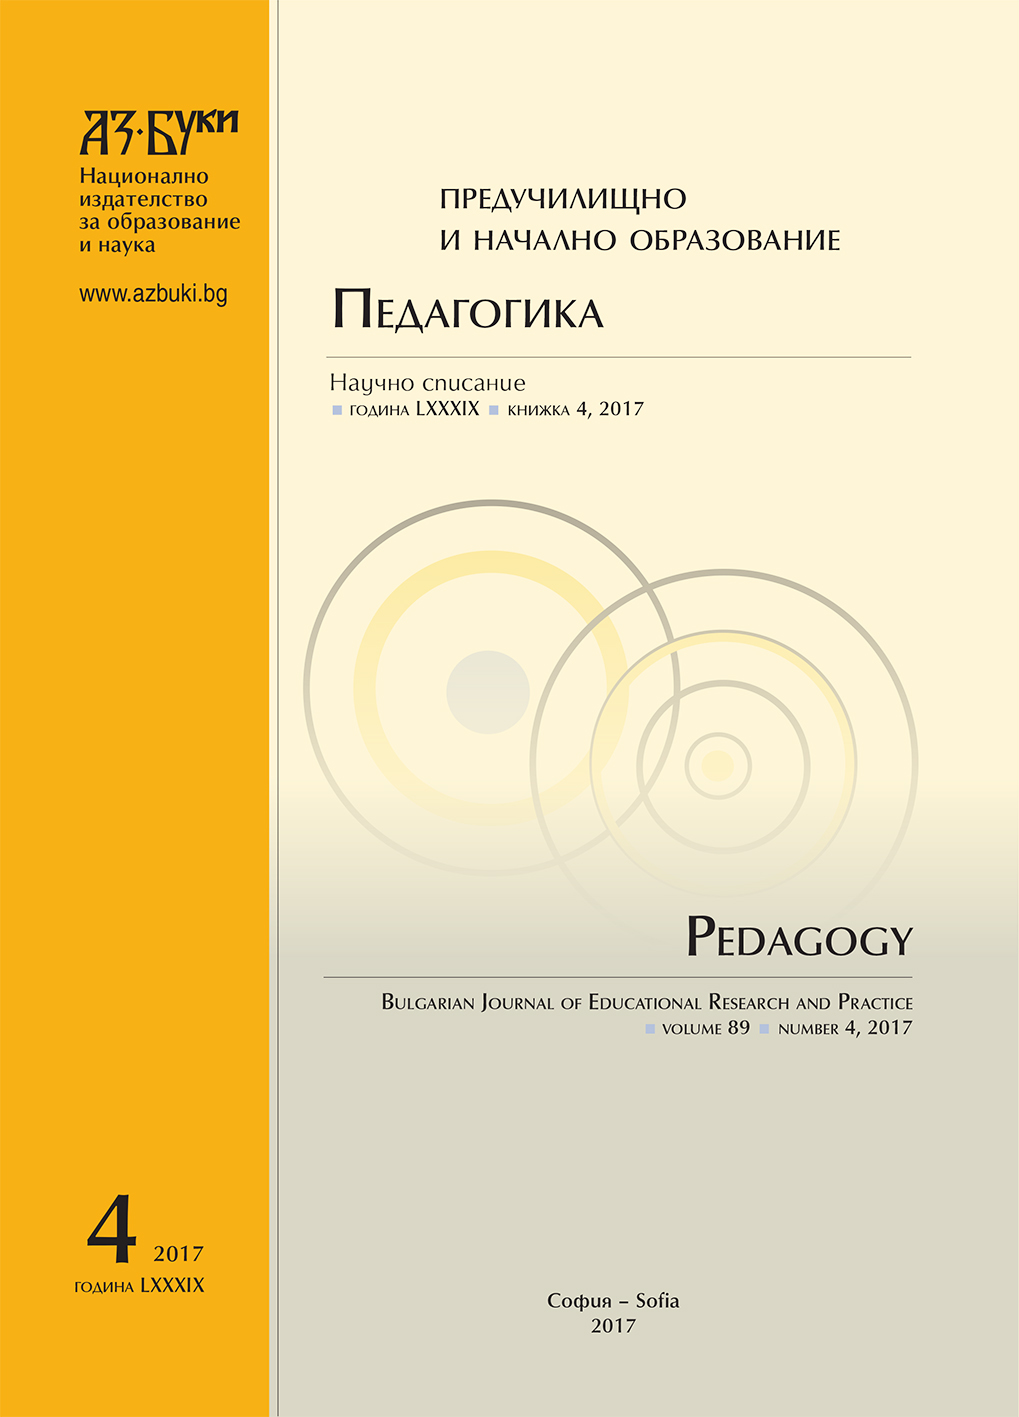 Growth of speciality “Social pedagogy” at Sofia University “St. Kliment Ohridski” Cover Image